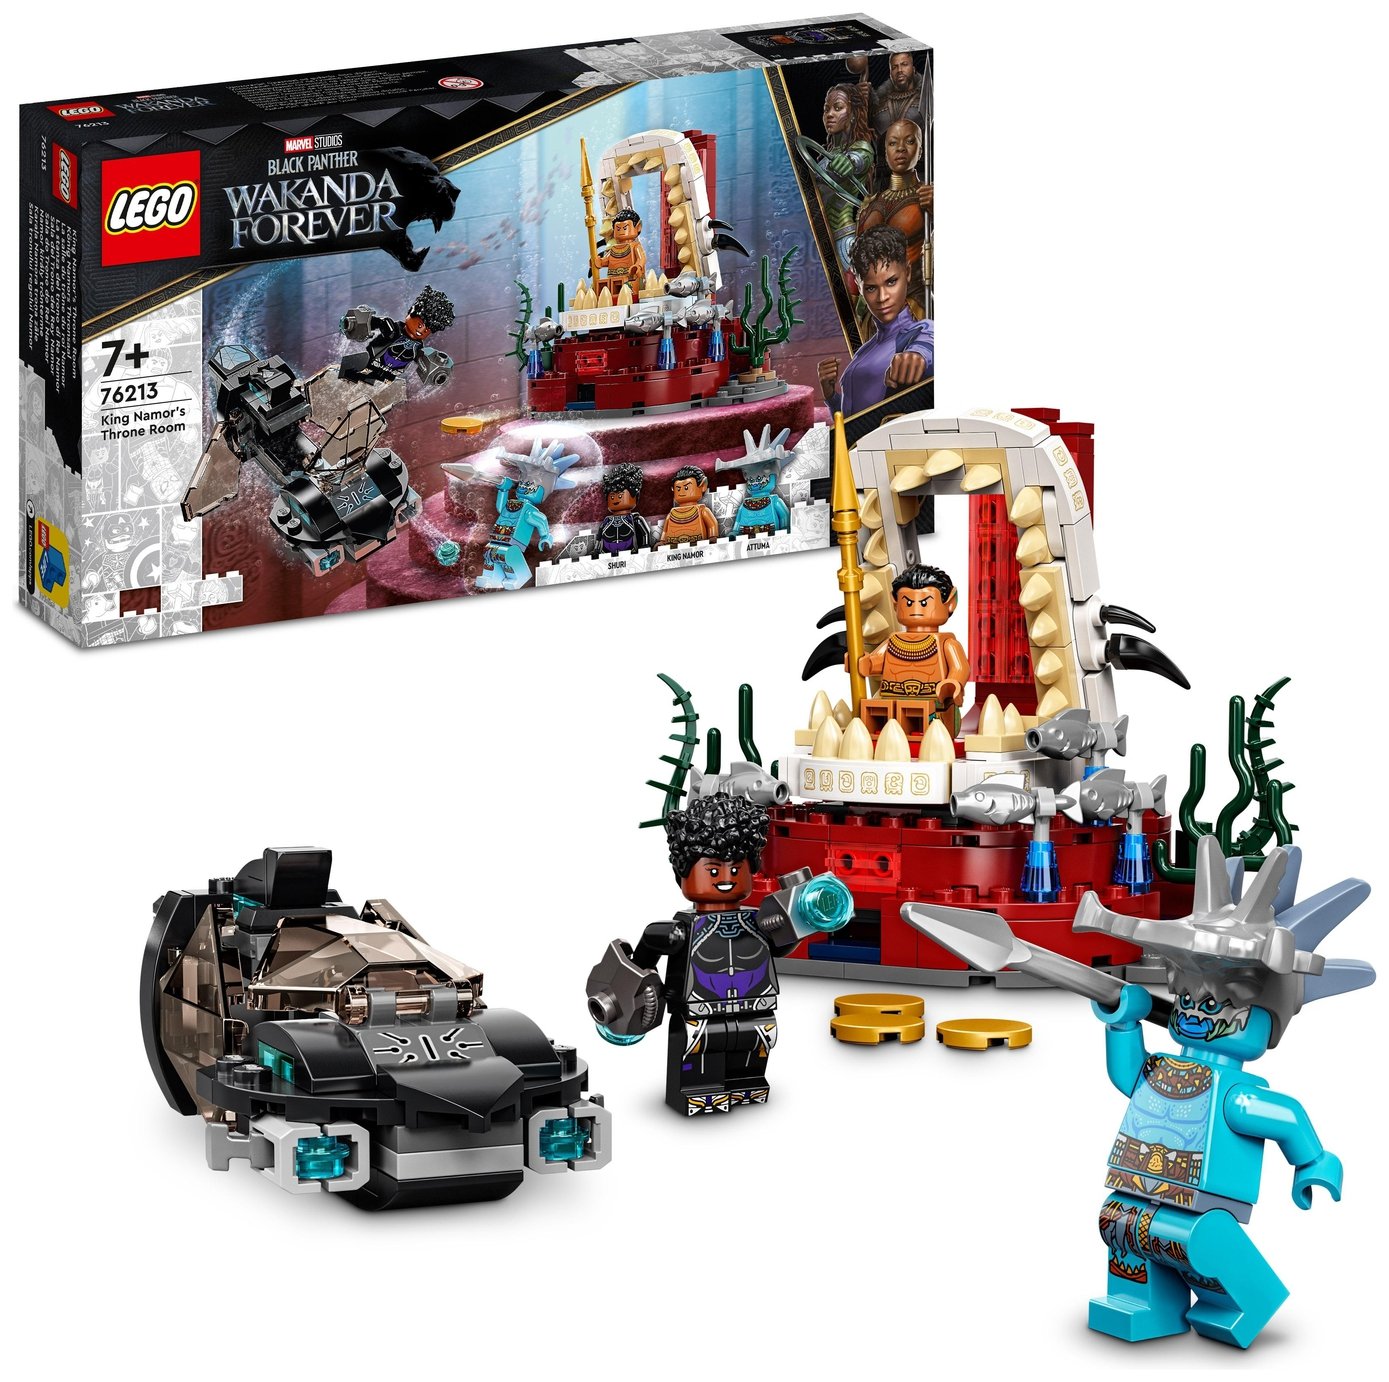 LEGO Marvel King Namor's Throne Room Black Panther Set 76213